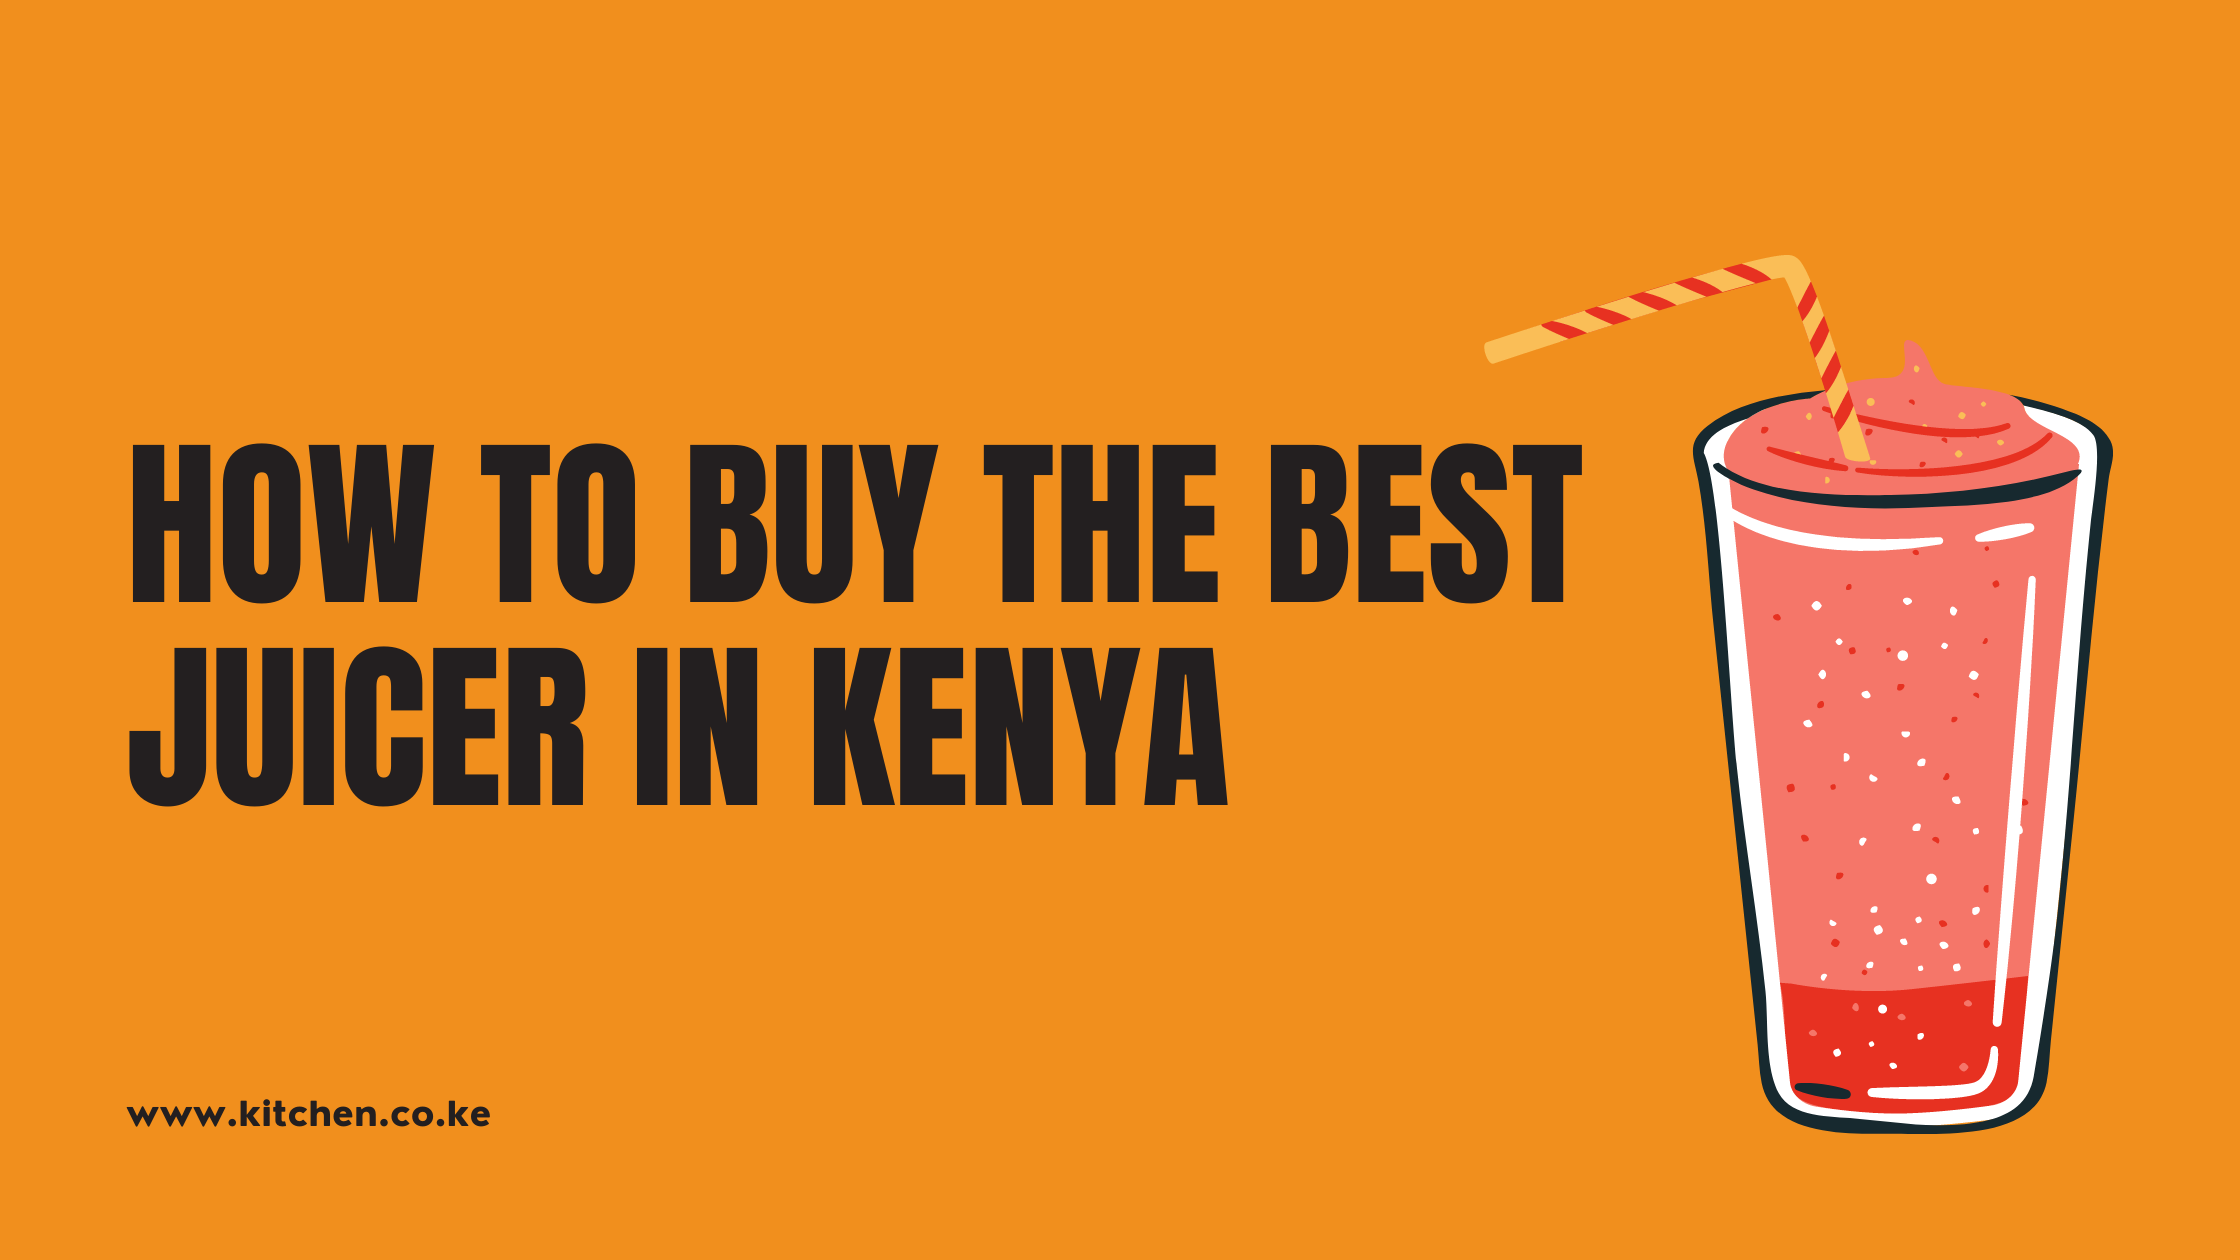 Juicer in Kenya: How To Buy The Best